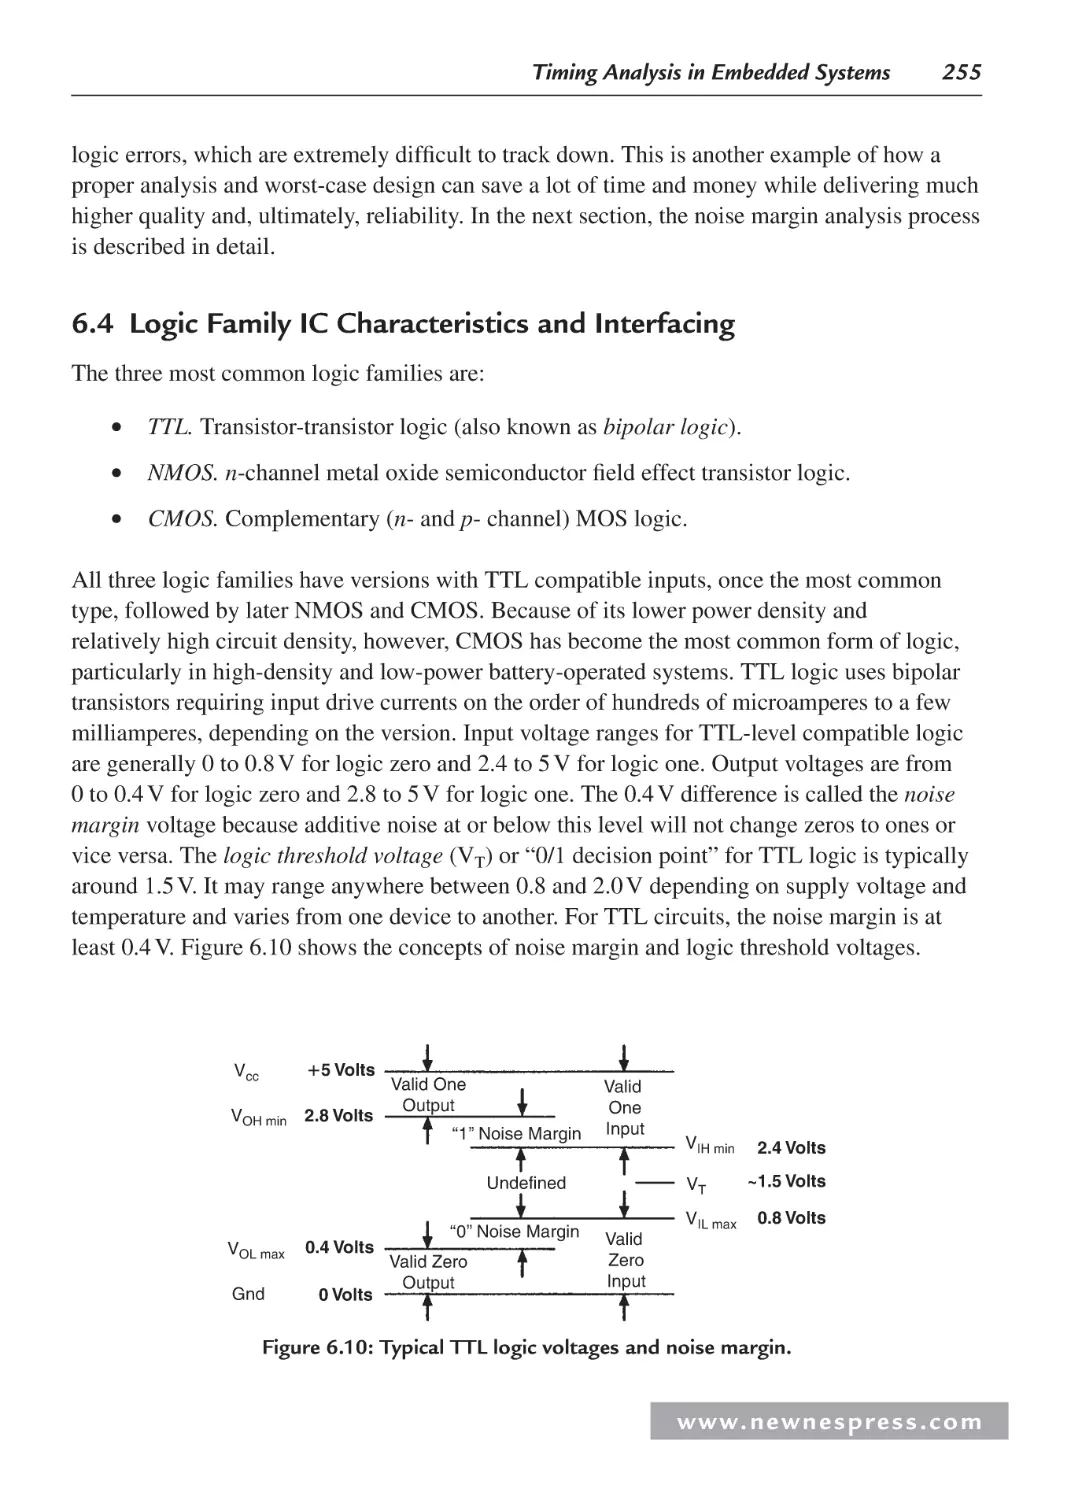 6.4 Logic Family IC Characteristics and Interfacing